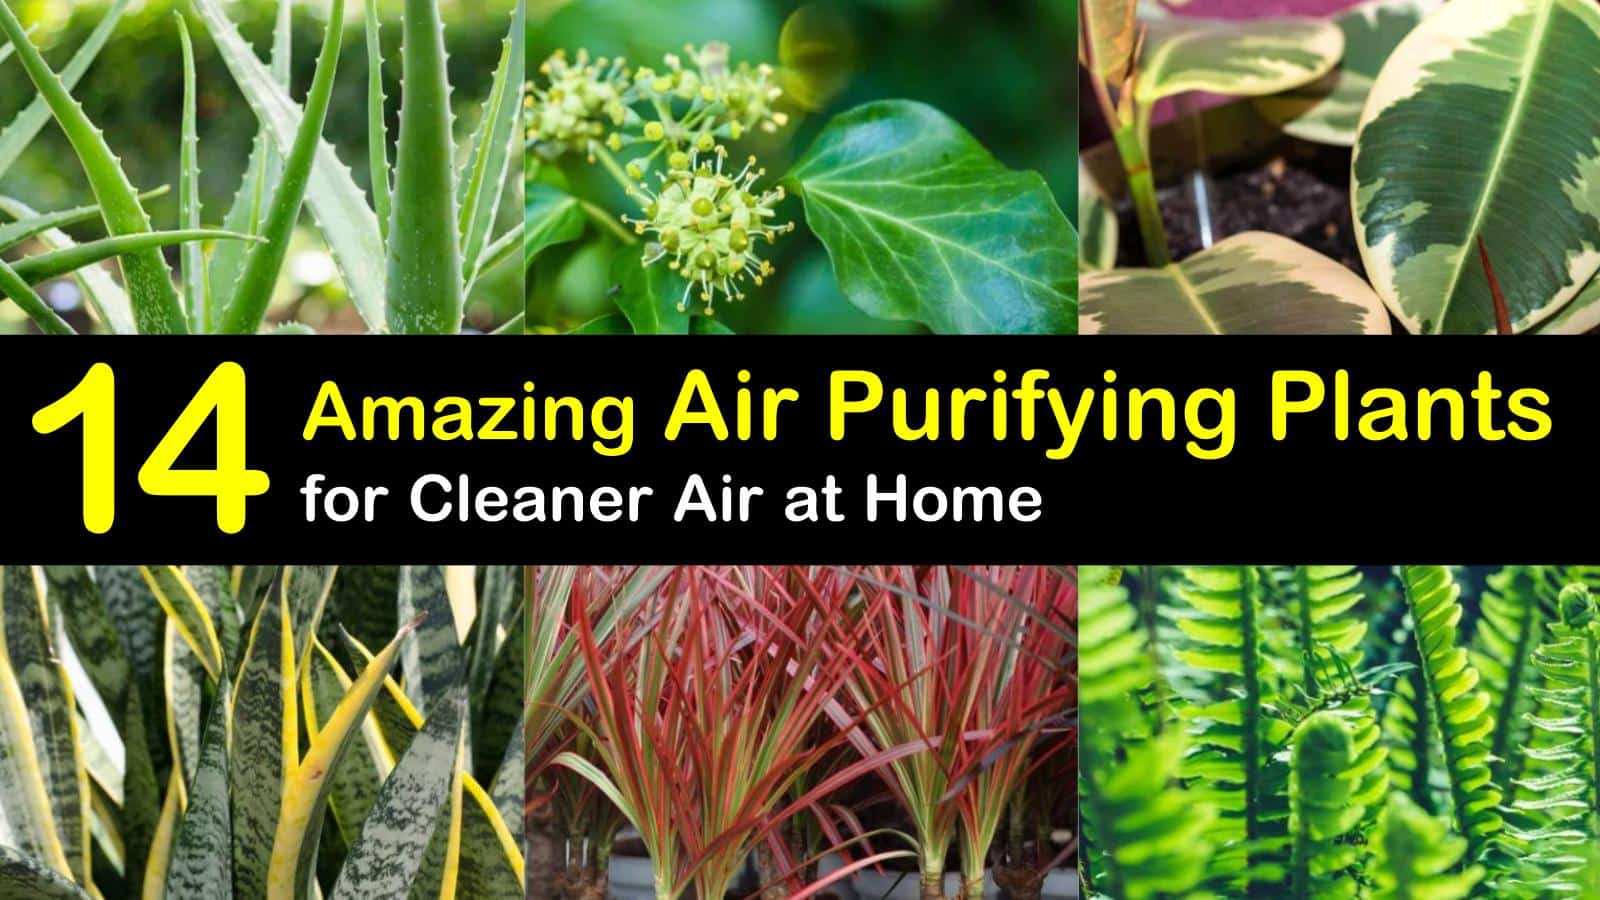 air purifying plants titleimg1